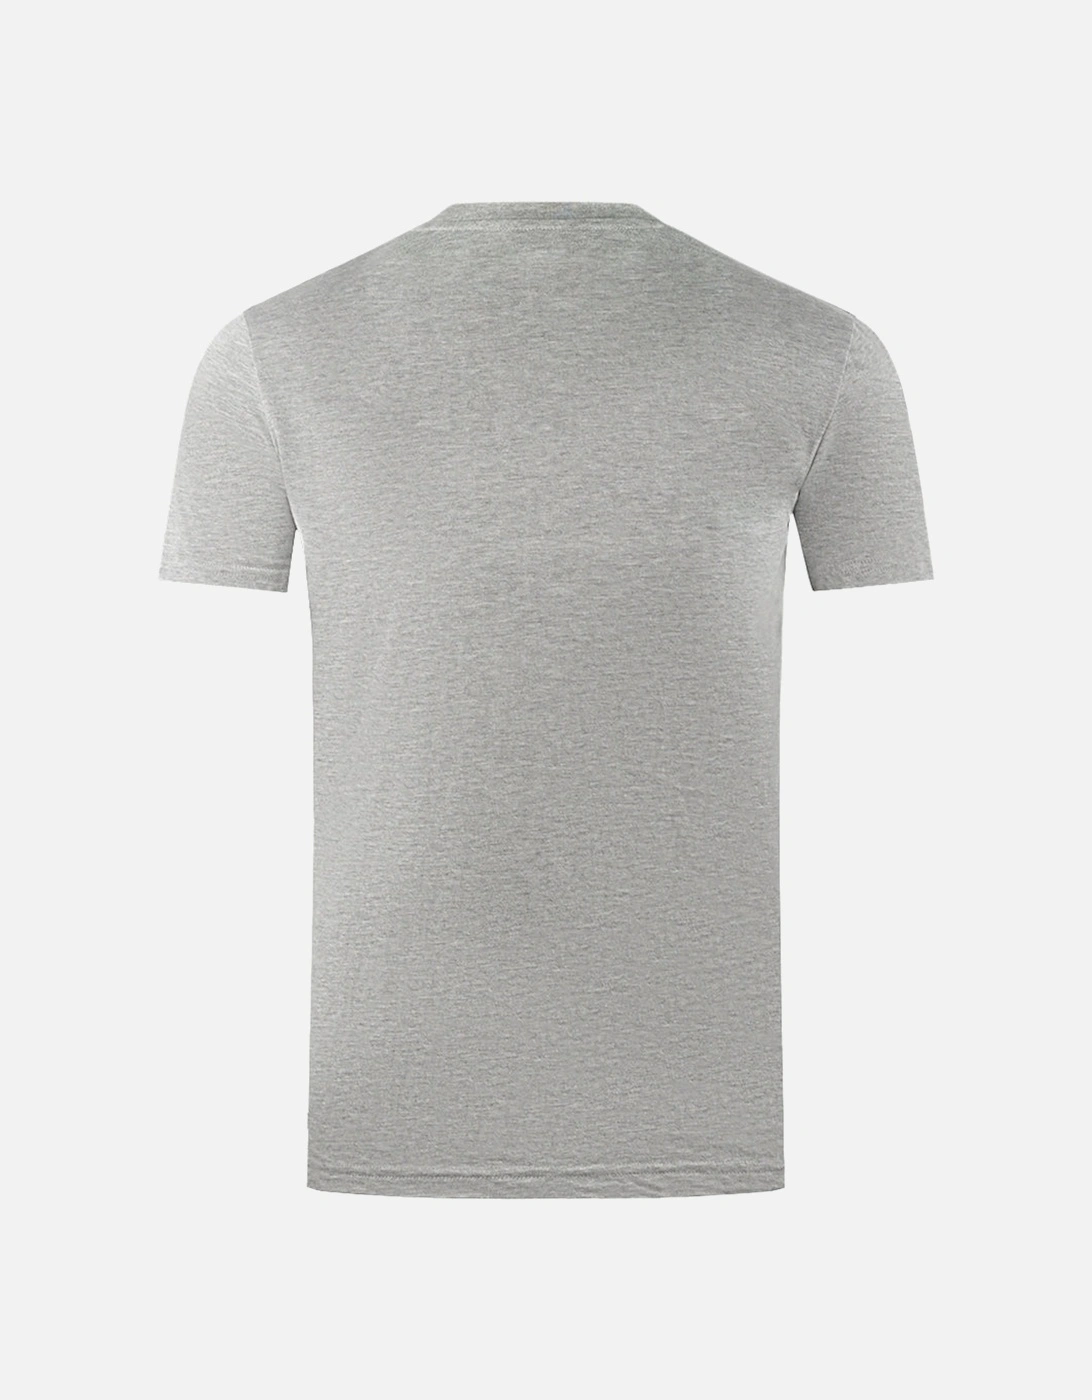 London Aldis Brand Logo Grey T-Shirt